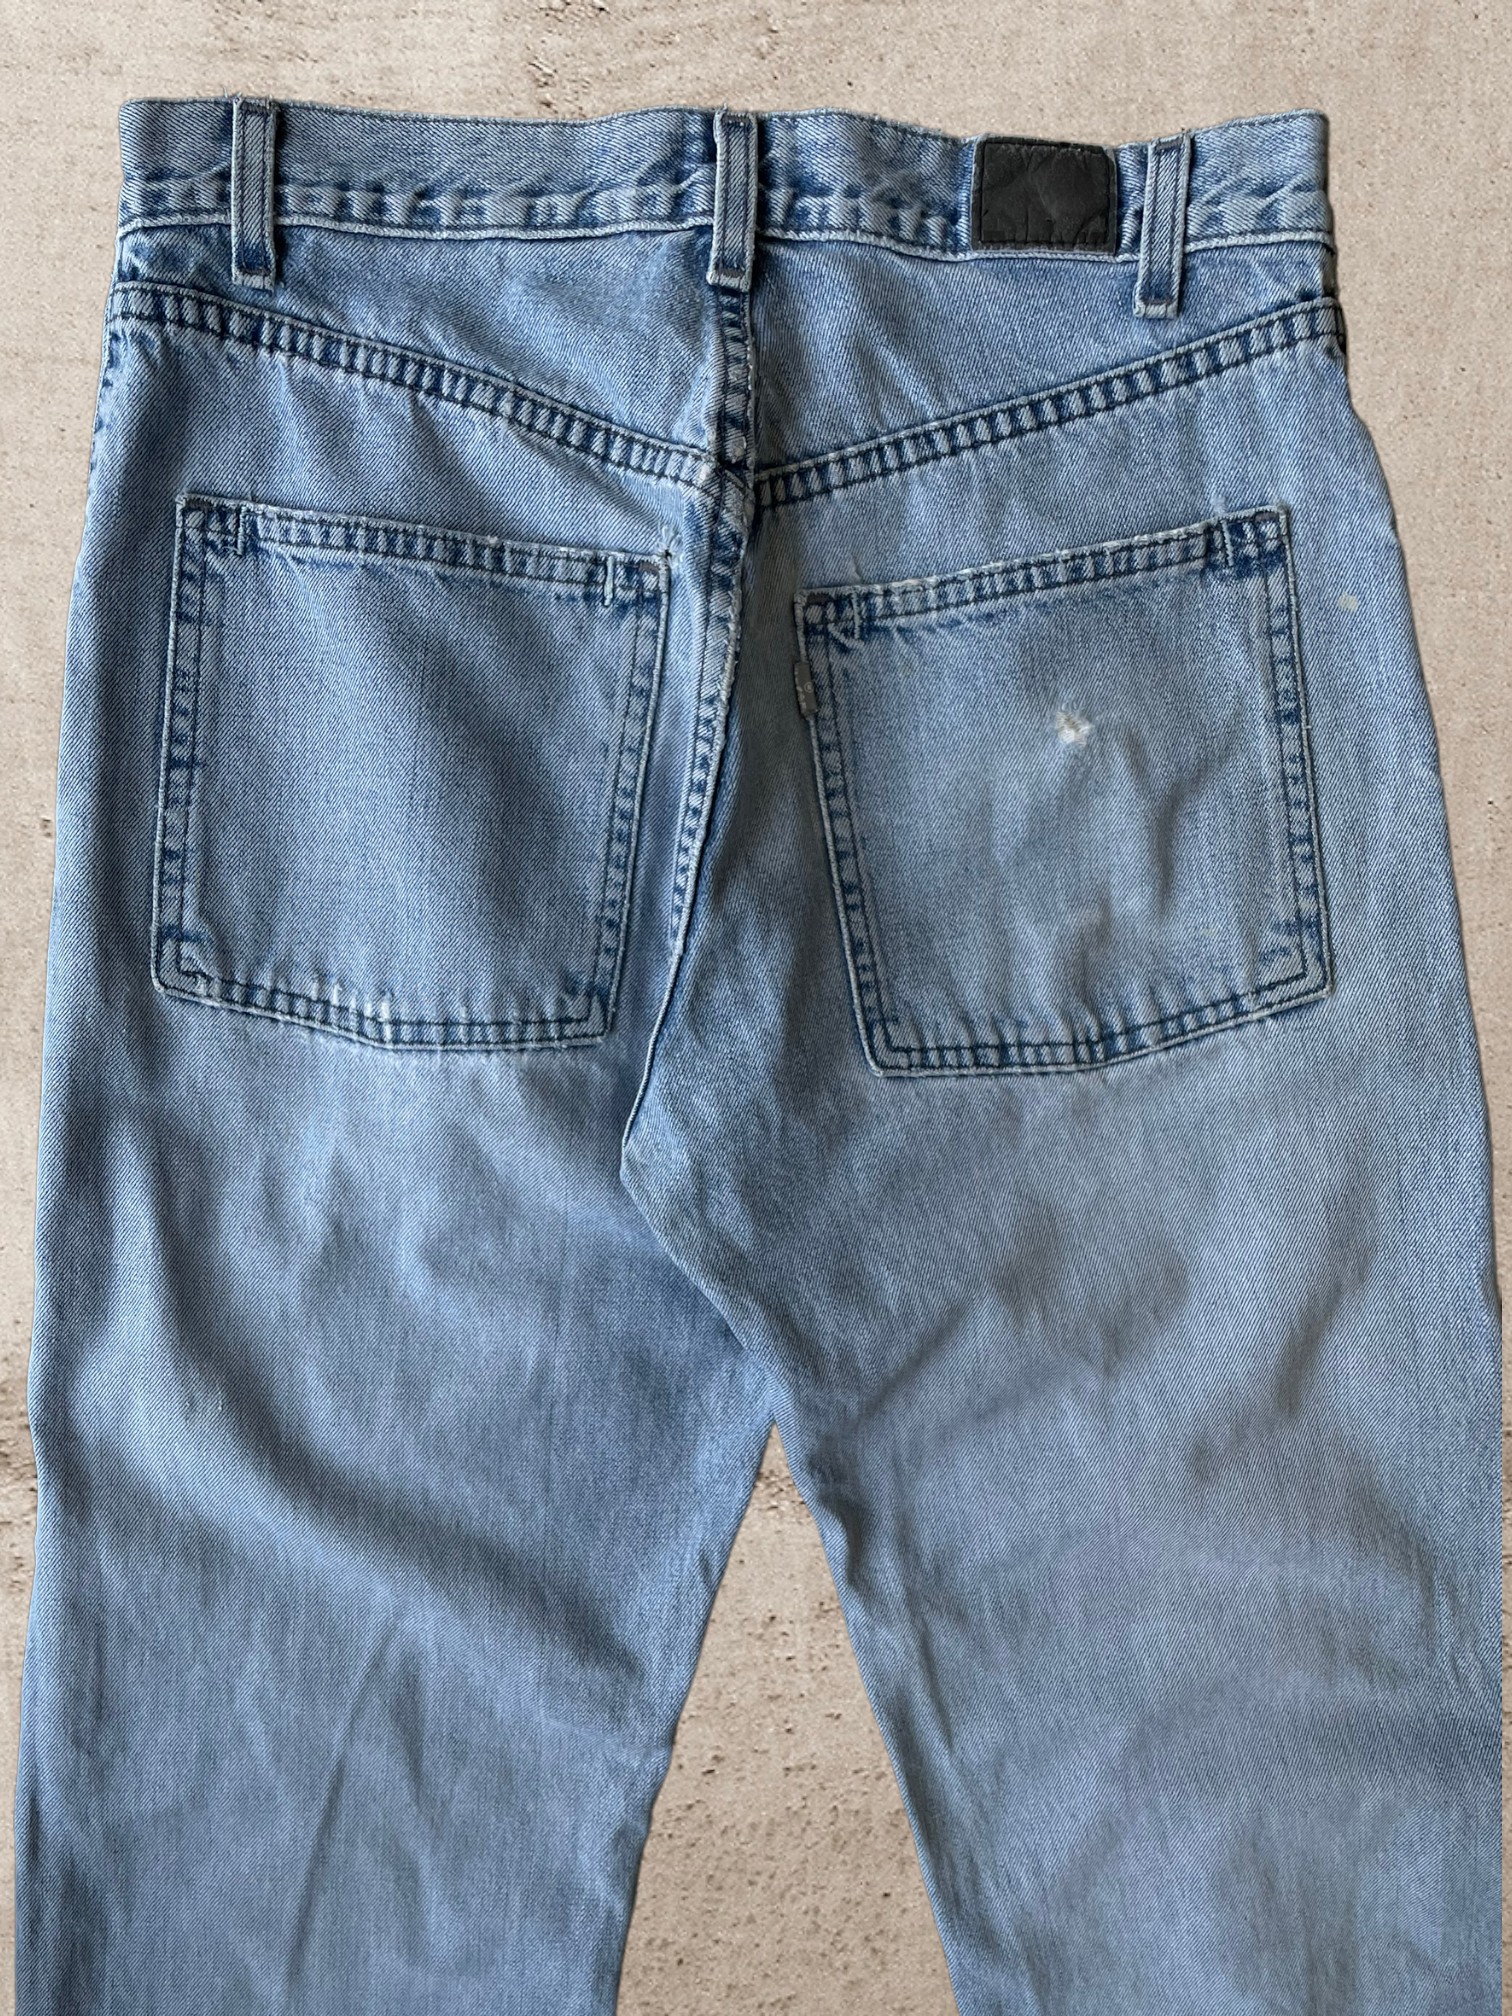 90s Levi Silvertab Loose Fit Jeans - 31x32